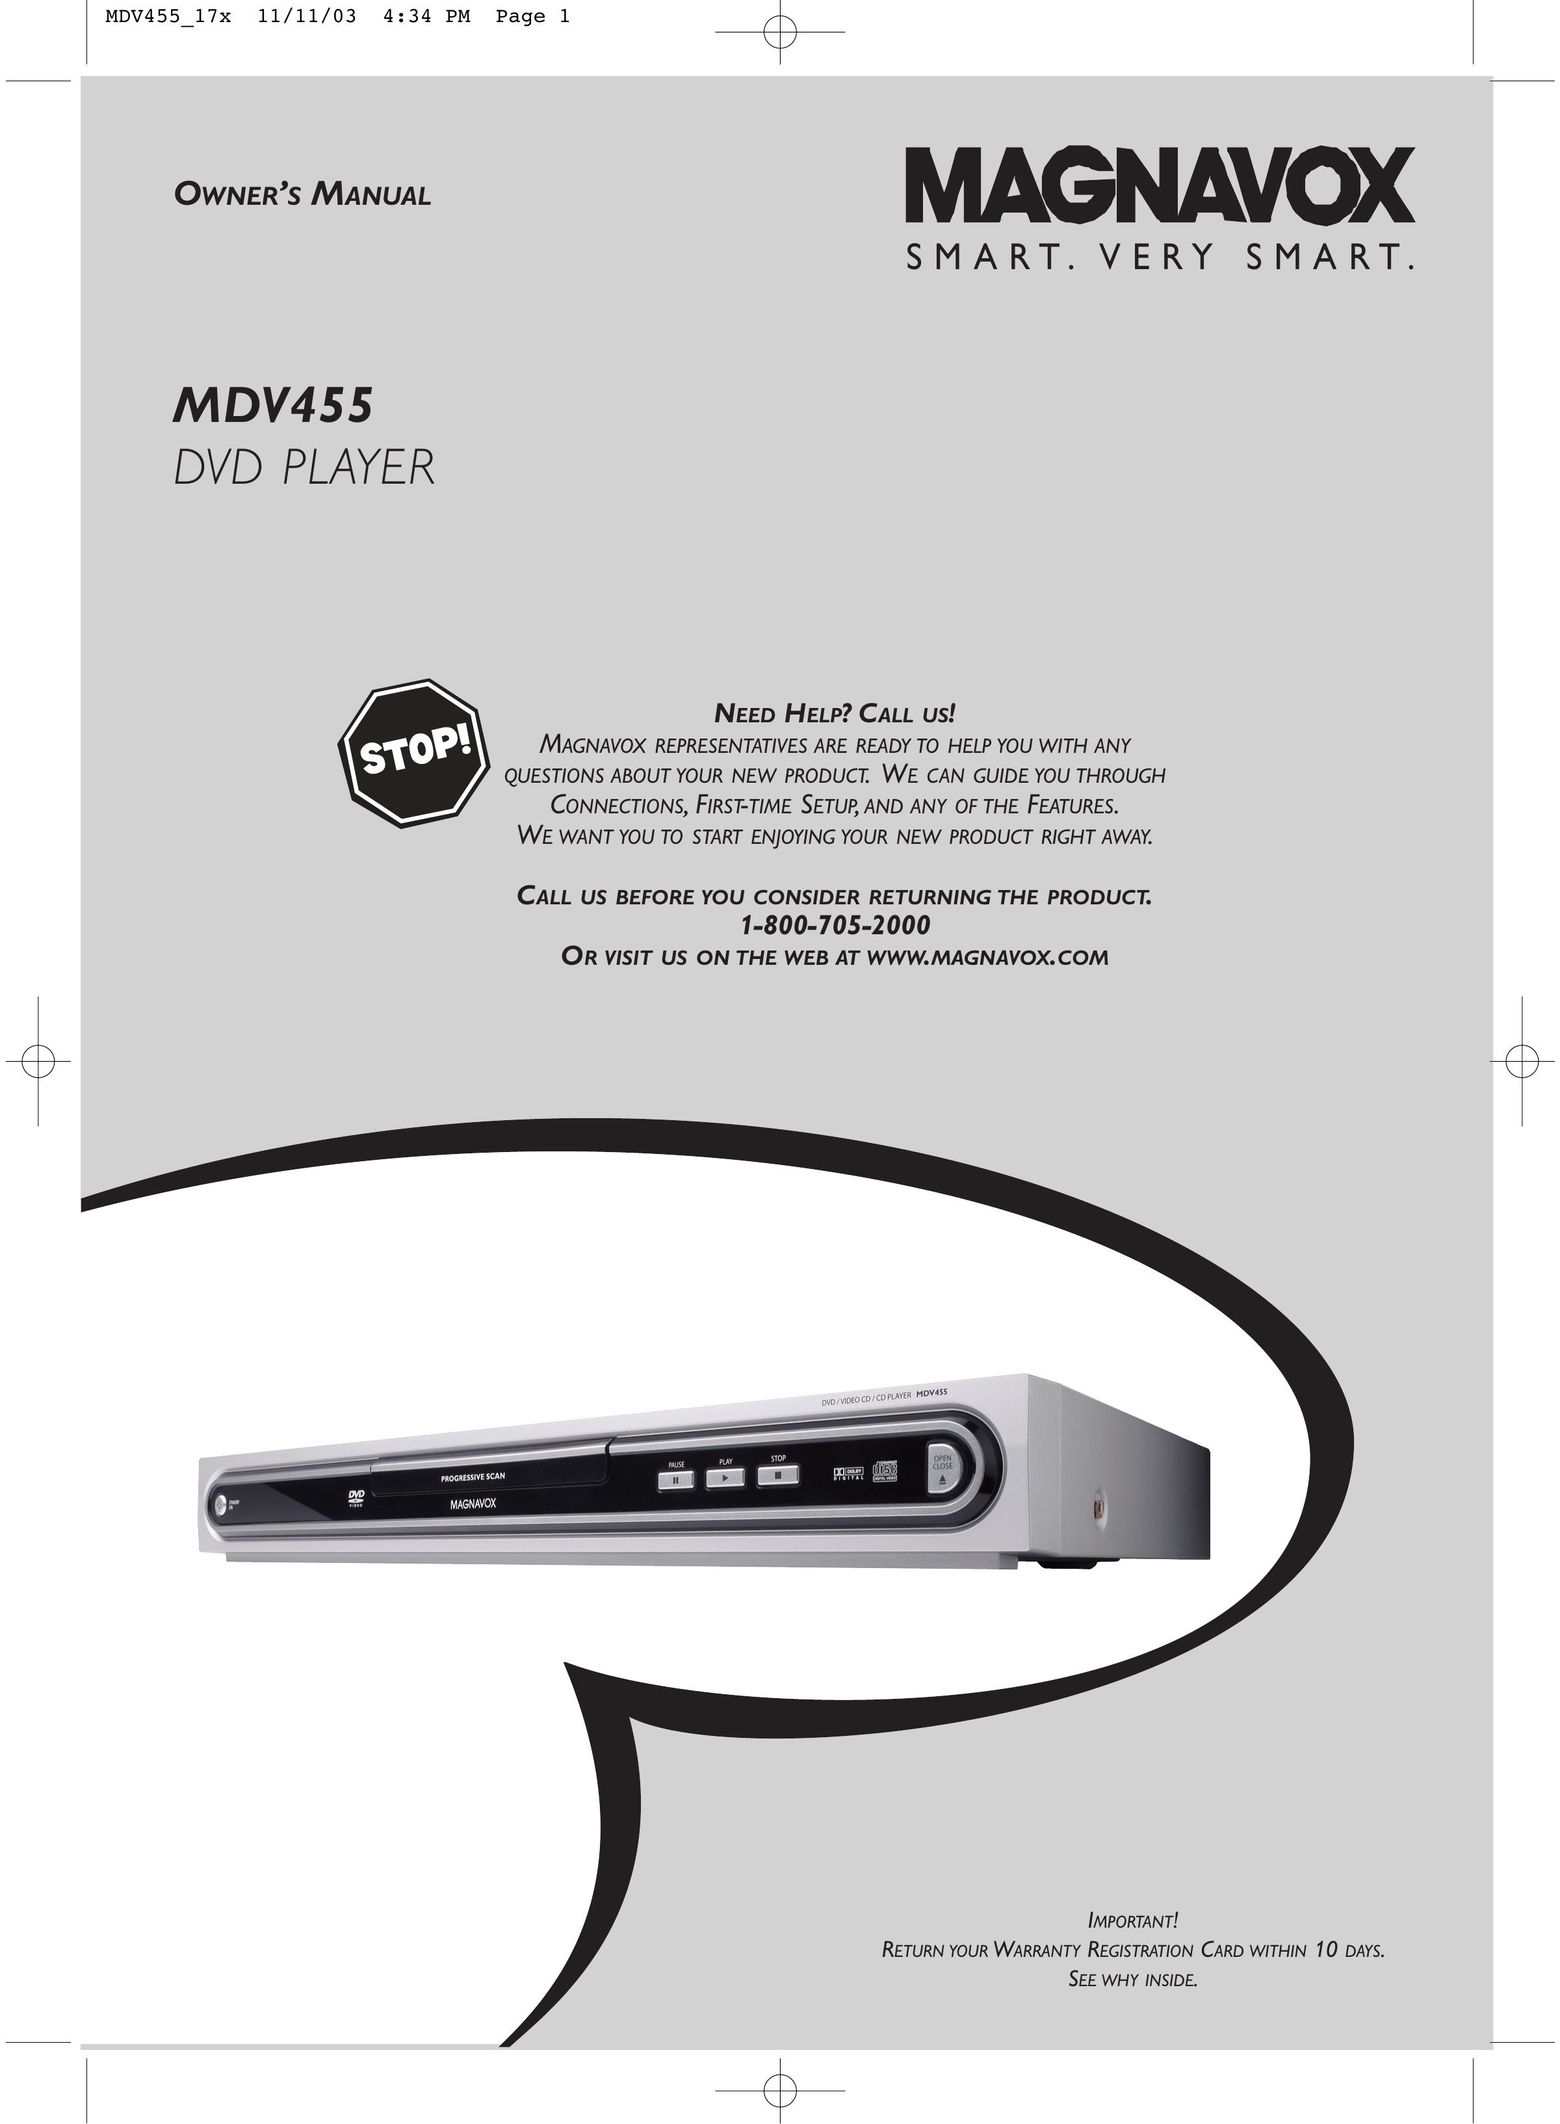 Magnavox MDV455 DVD Player User Manual